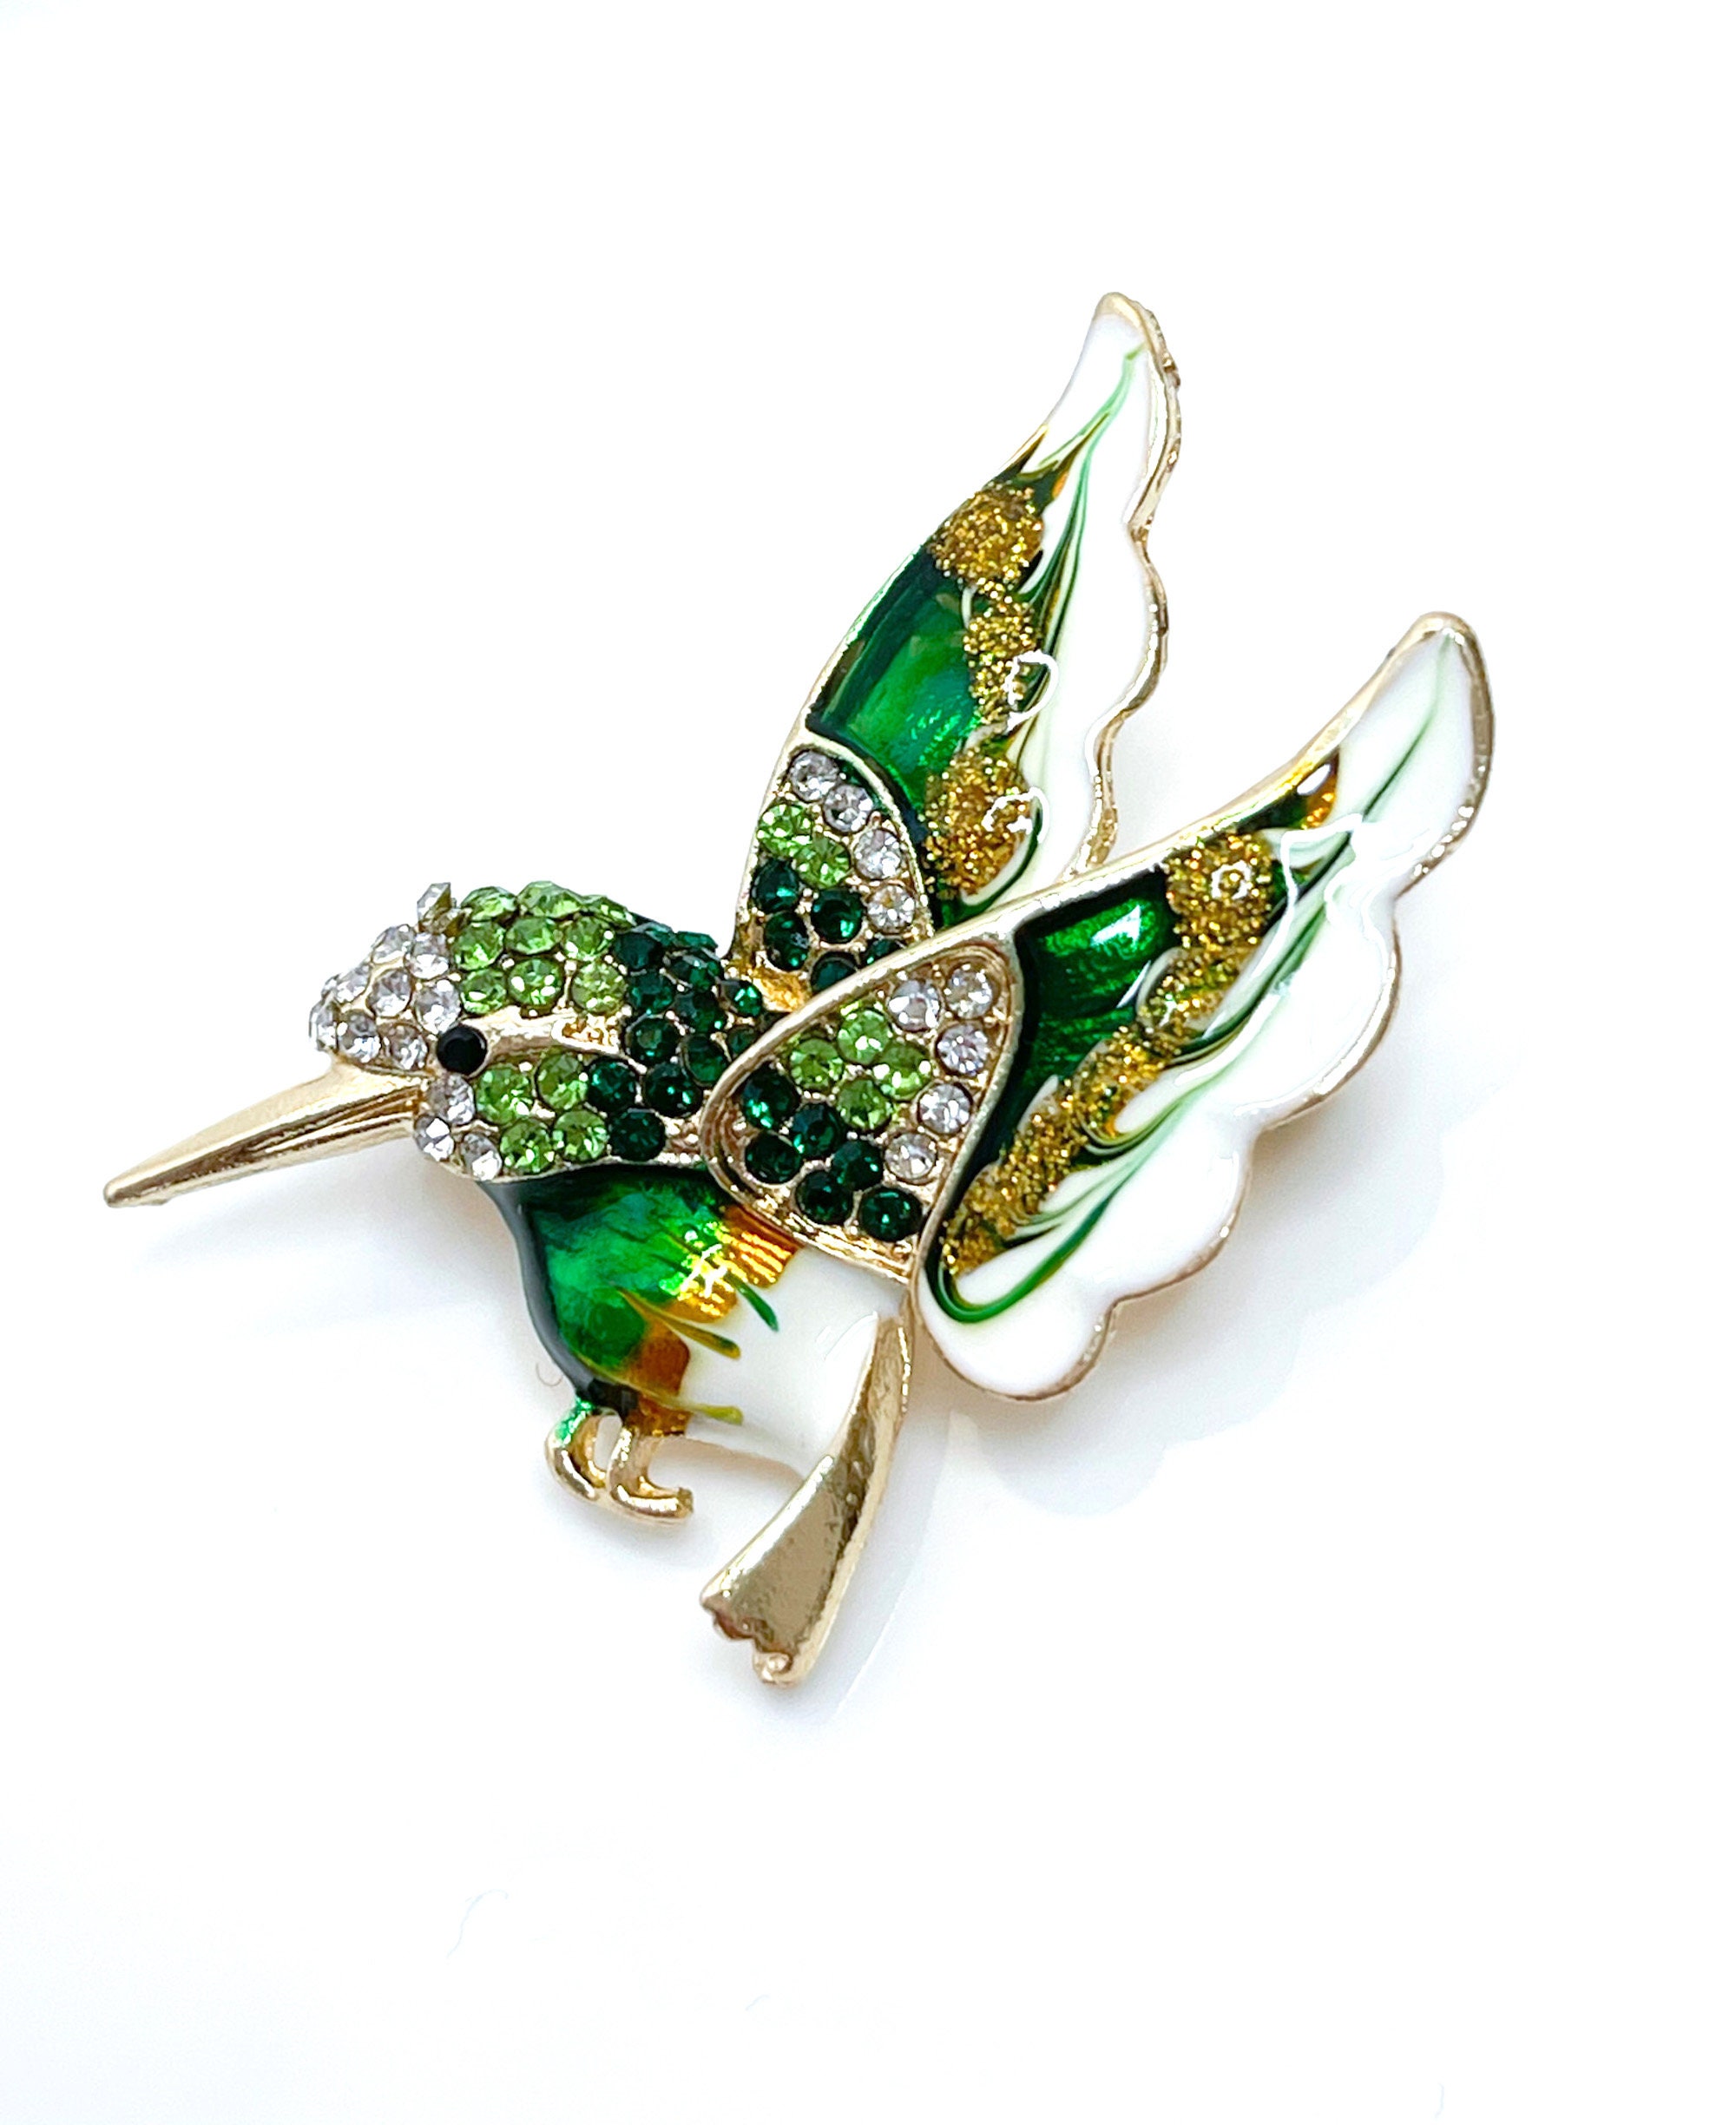 Emerald Green Bird Brooch, Handmade Brooch for Women in the UK, Mosaic  Jewellery, Big Bird Badge With Glass Flowers 